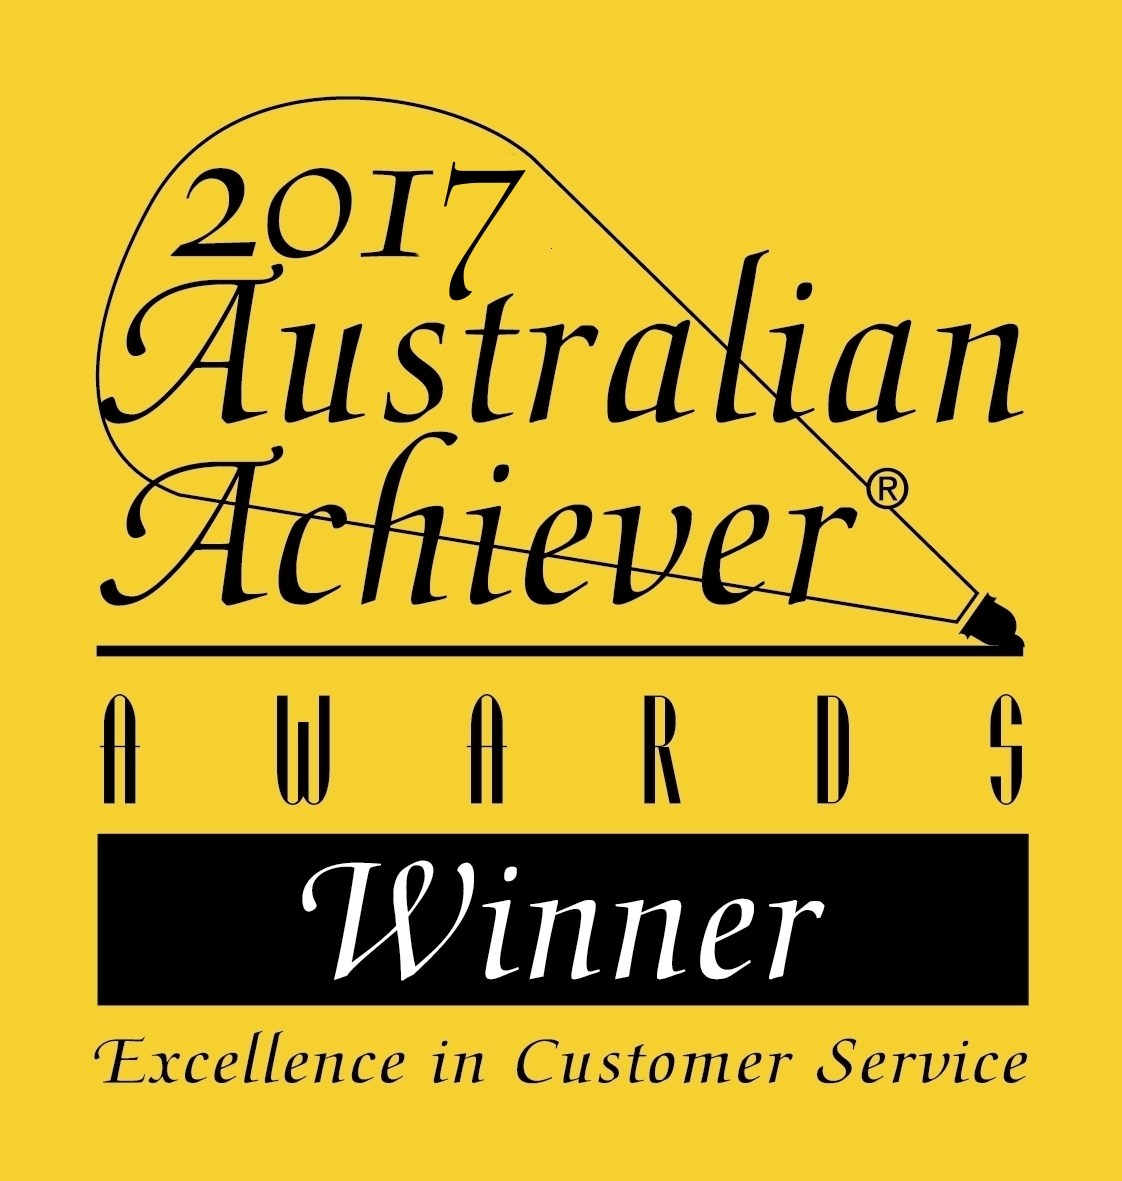 Silvans Australian Achiever Awards 2017